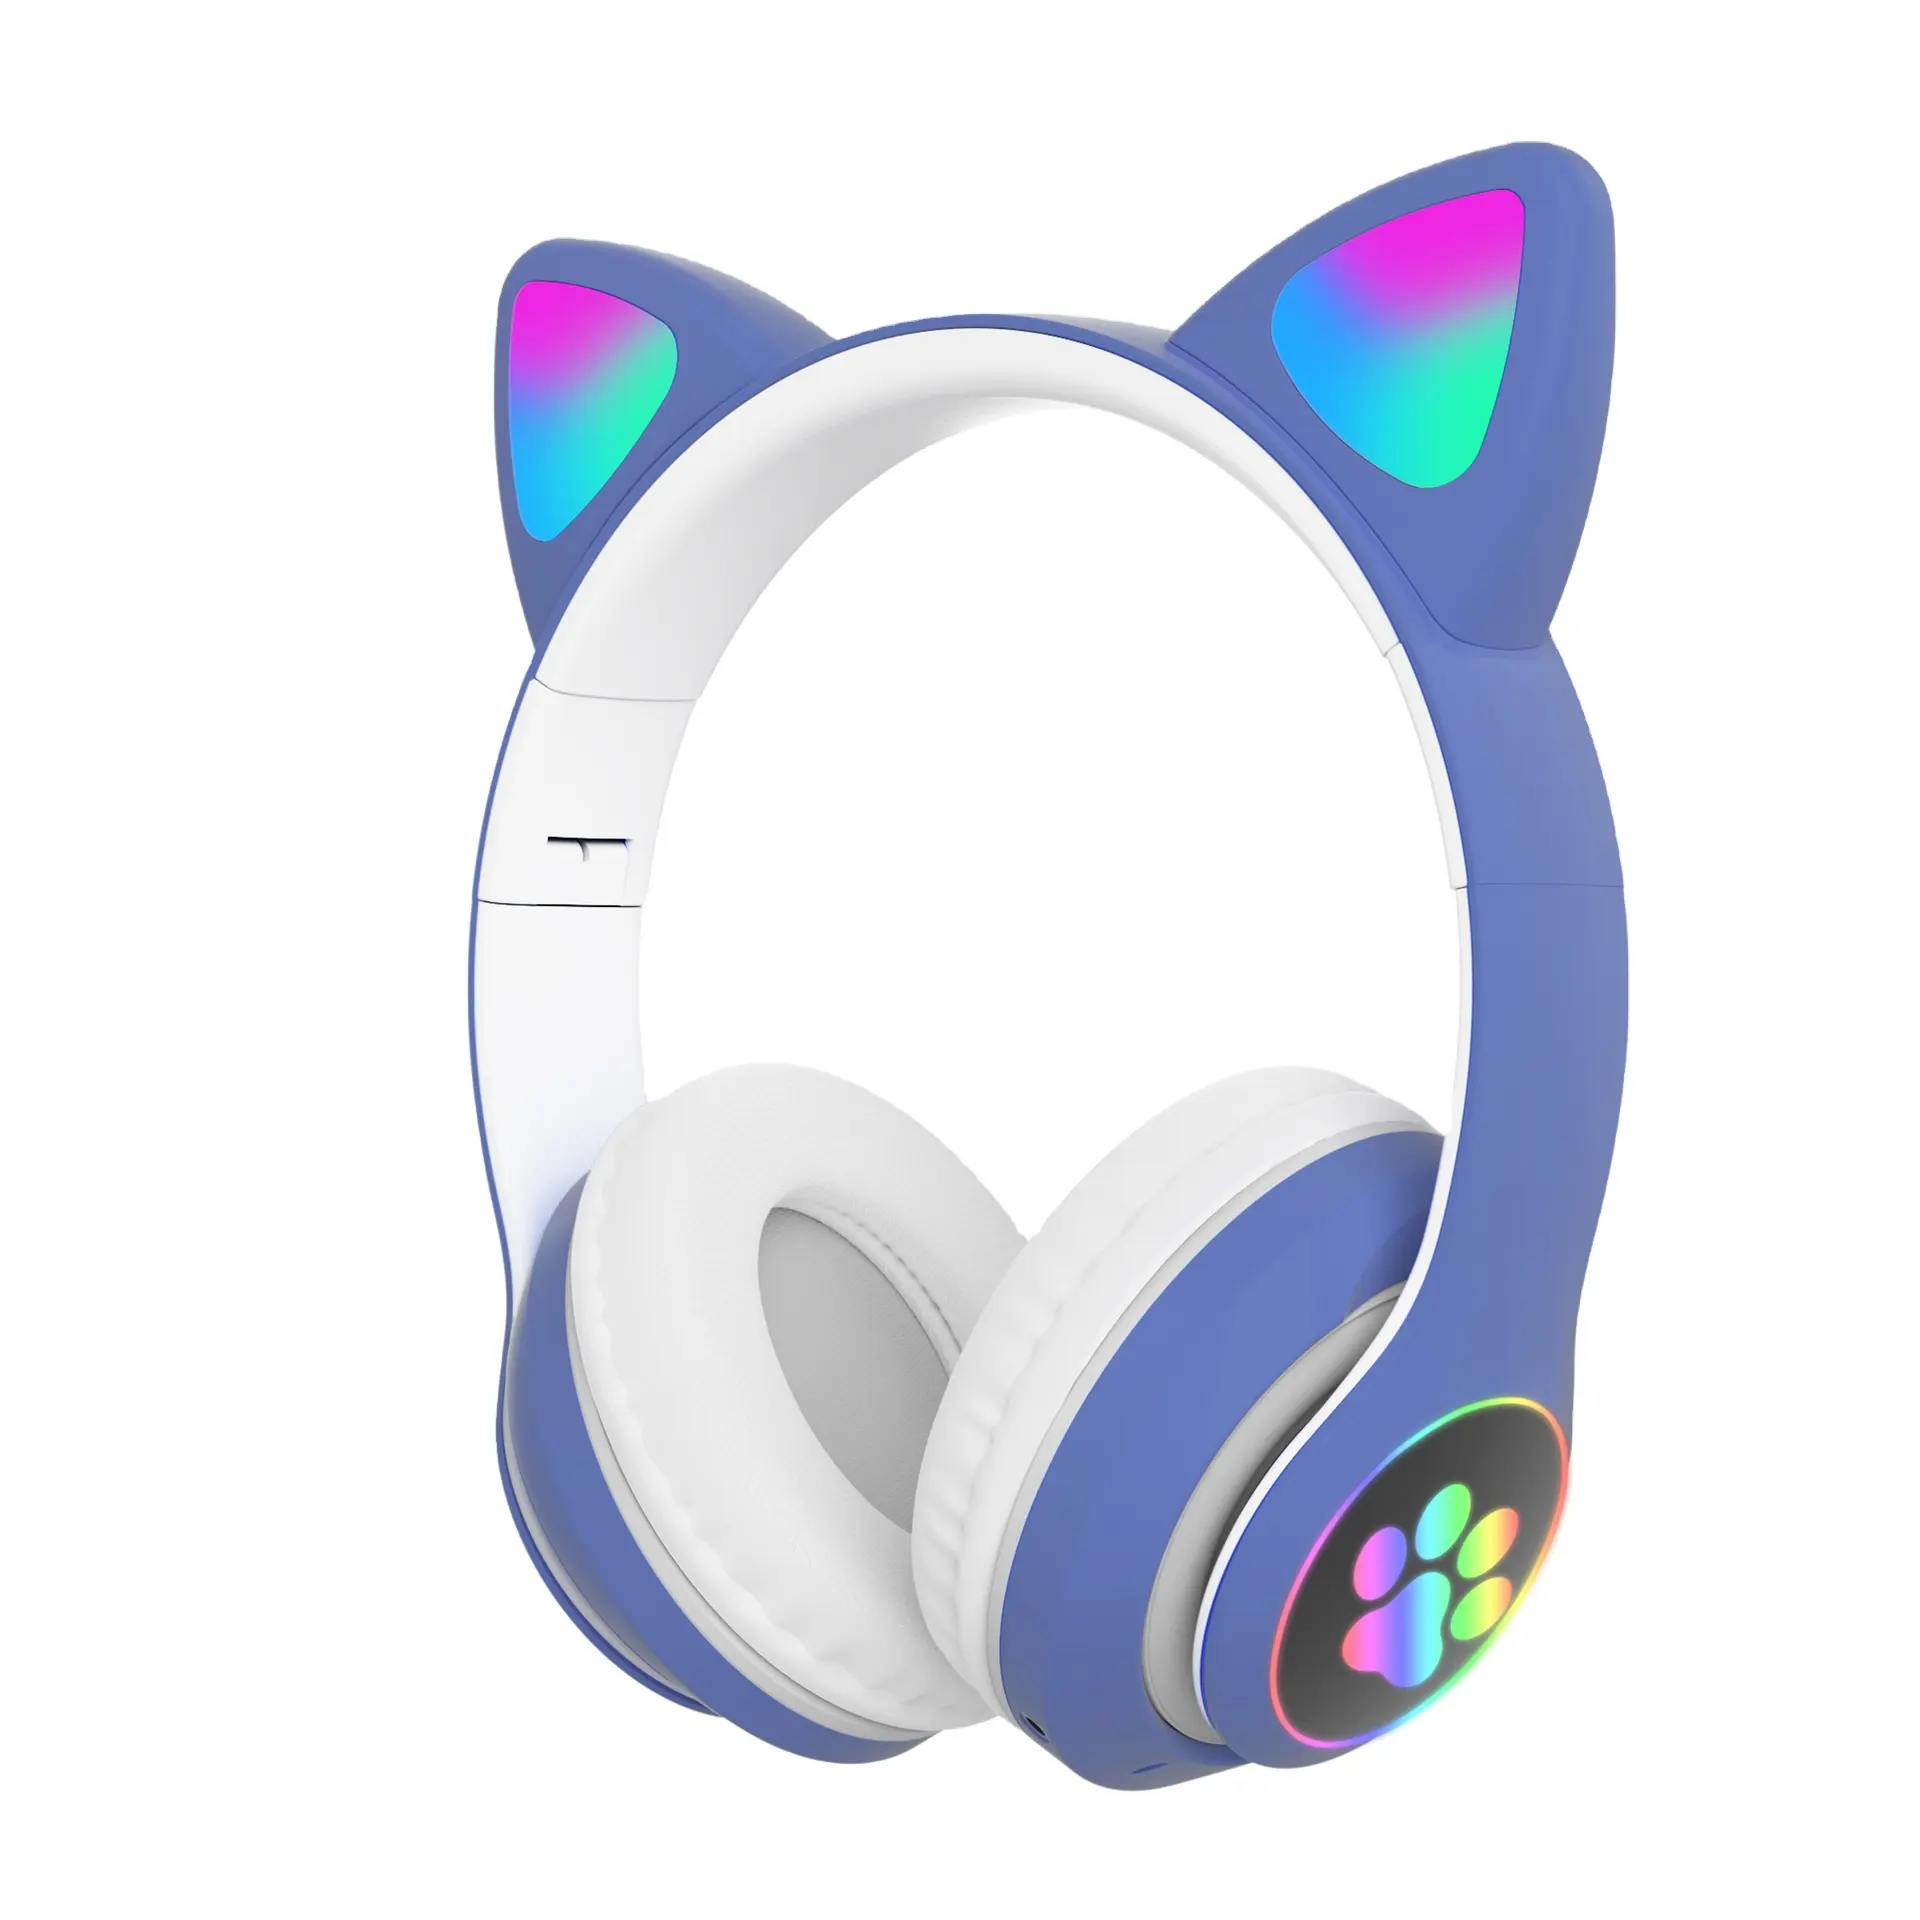 oem customized logo headphone Wireless sport Music cute girl cat ear wireless led Gaming Bluetooth Earphones Headset With Micro